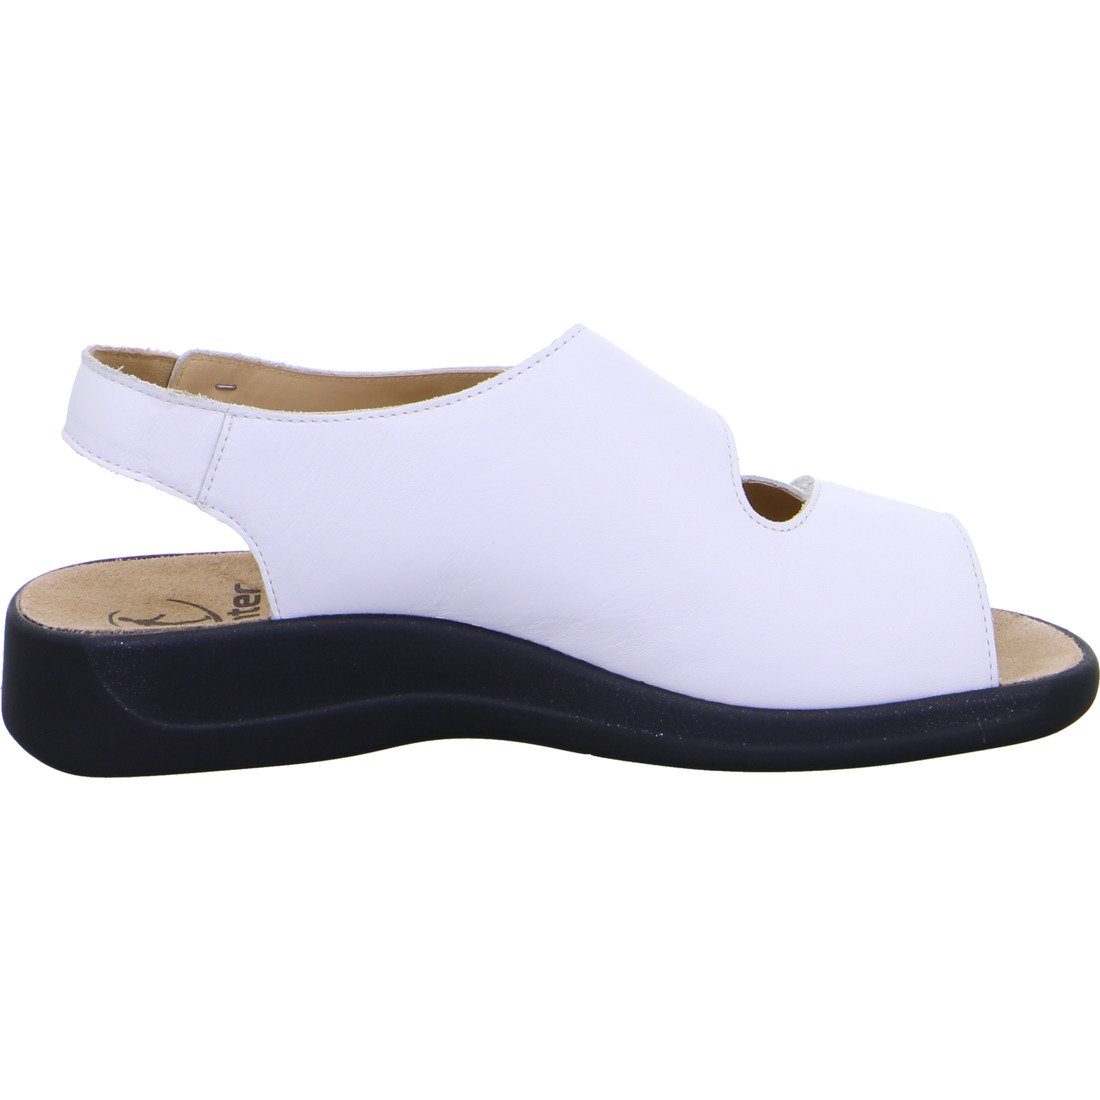 Schuhe, weiß - Monica Ganter Sandalette 045896 Ganter Materialmix Sandalette